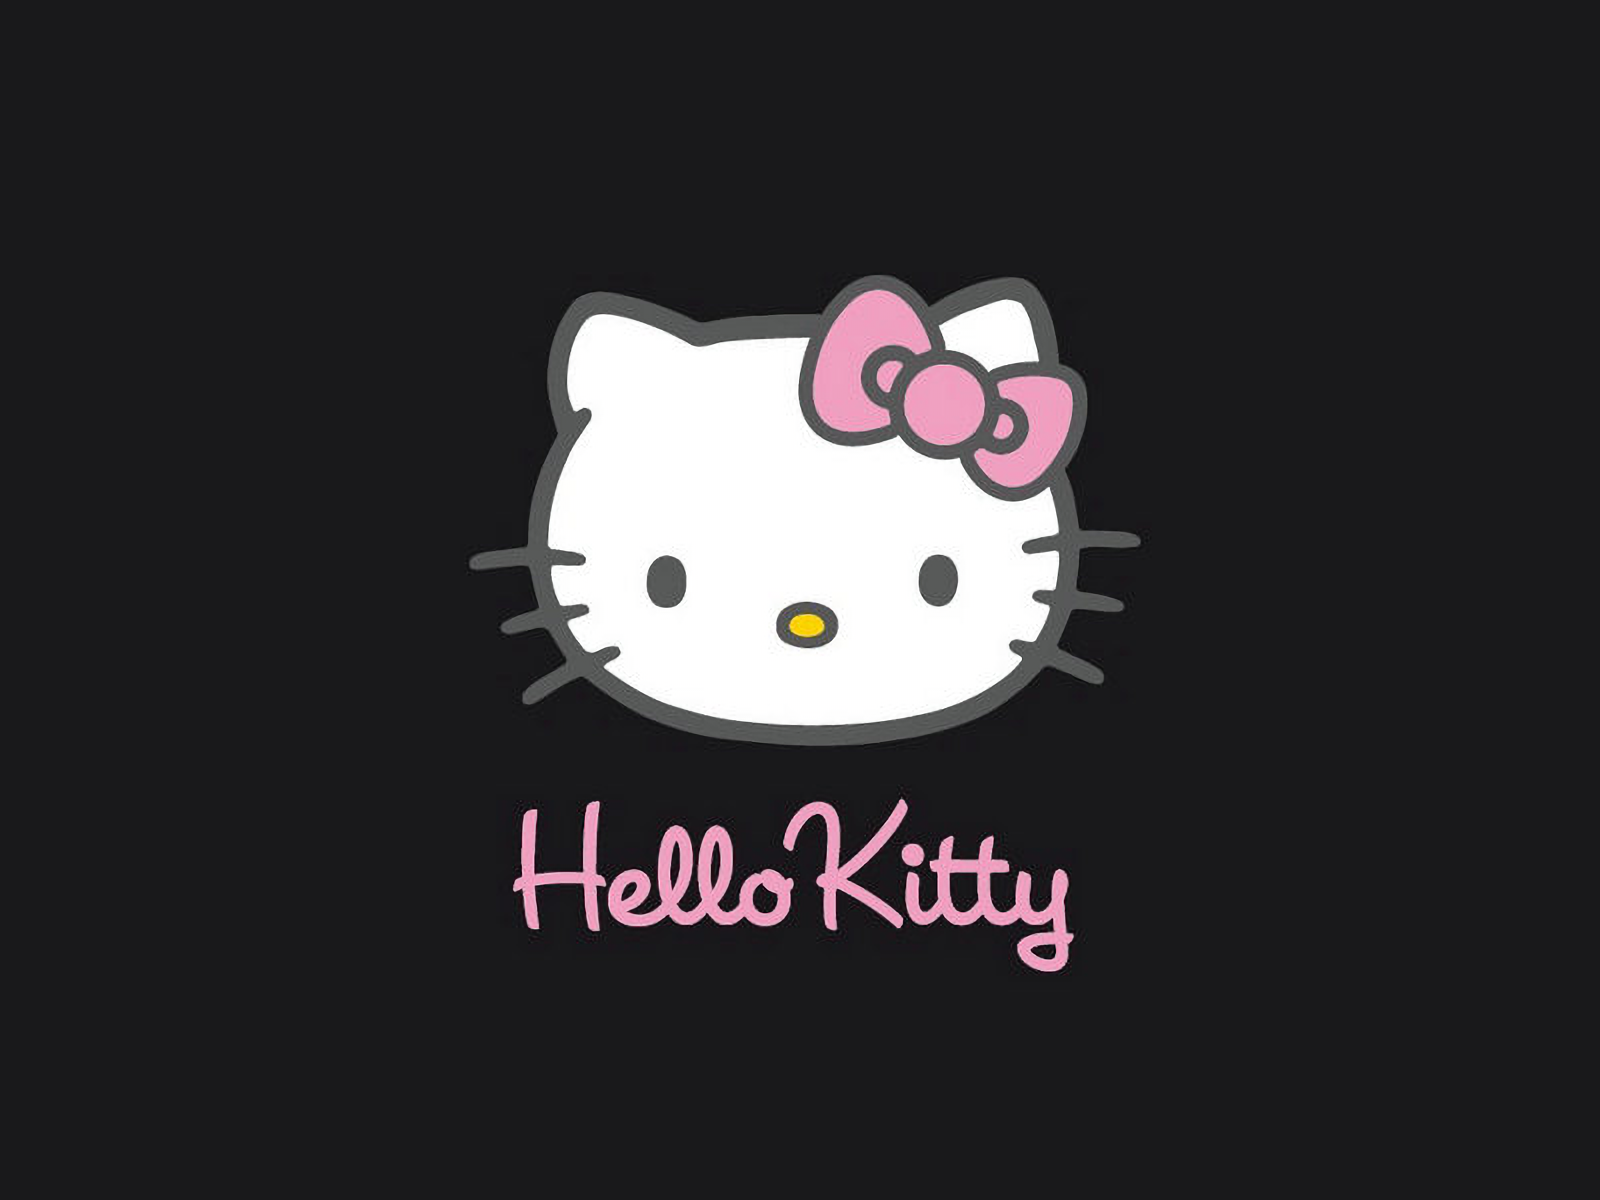 Hello Kitty - Hello Kitty Wallpaper (25605432) - Fanpop